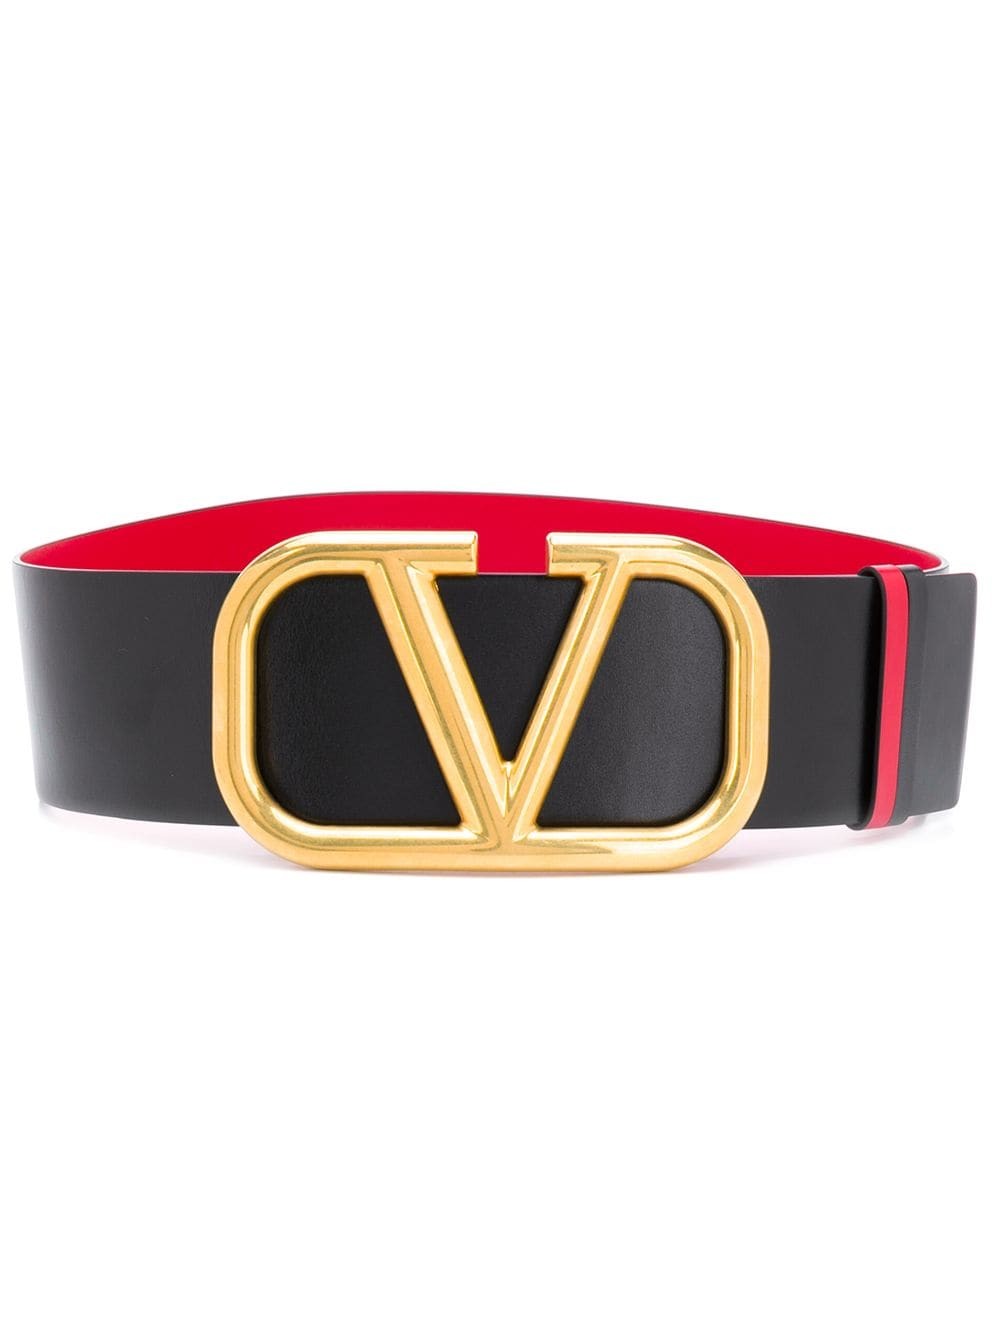 Valentino - Garavani VLogo Signature Reversible Belt - Black/Red